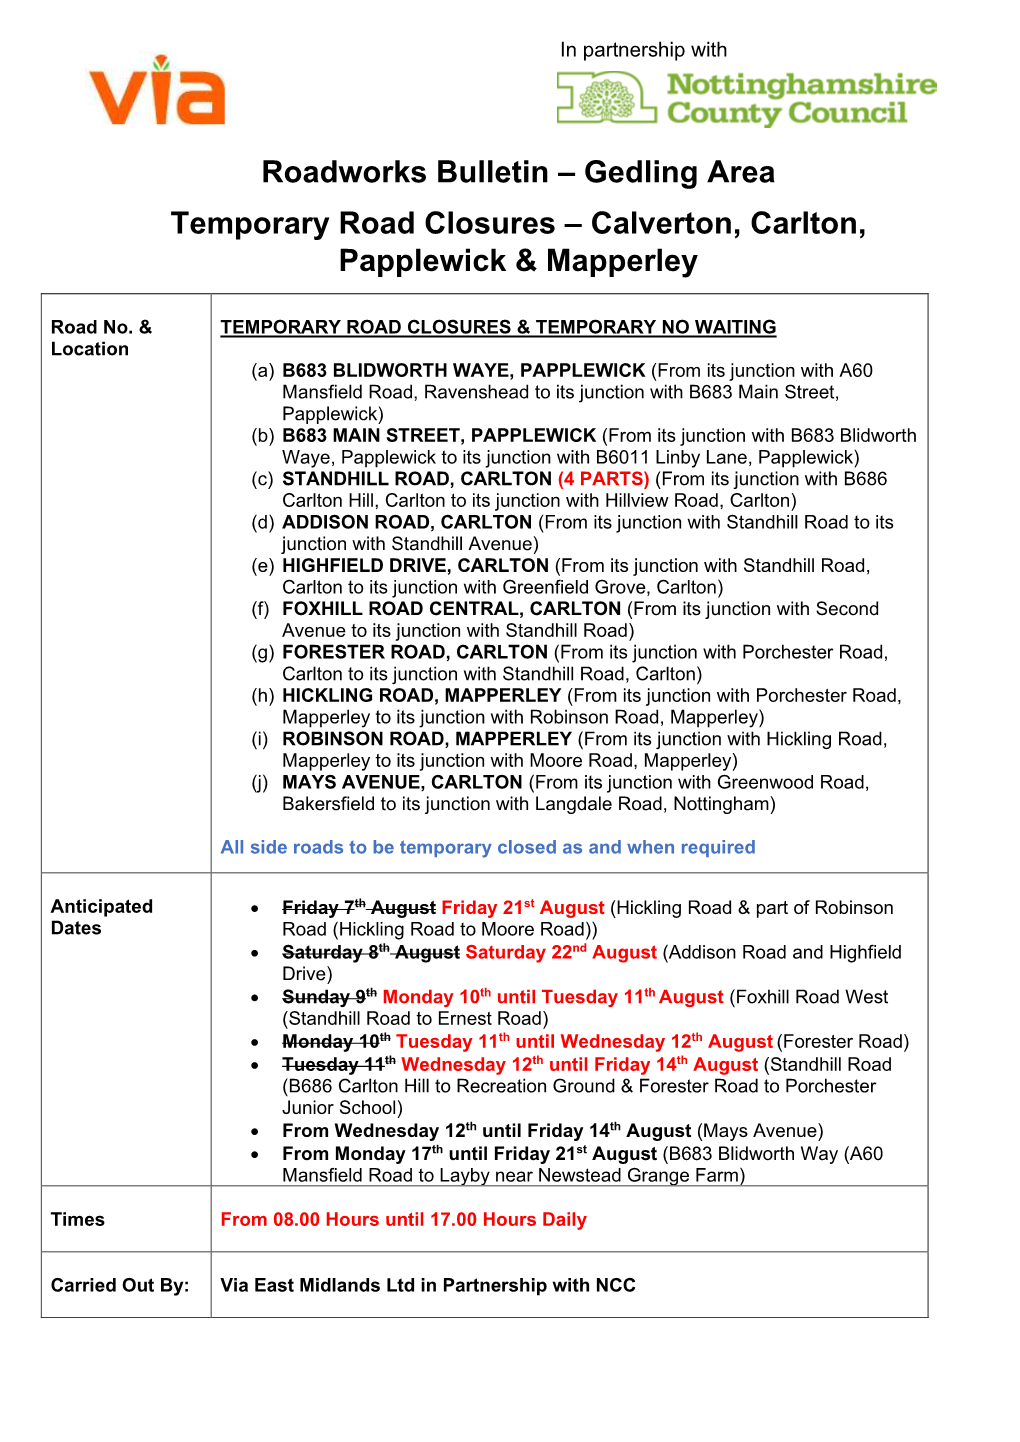 Roadworks Bulletin – Gedling Area Temporary Road Closures – Calverton, Carlton, Papplewick & Mapperley